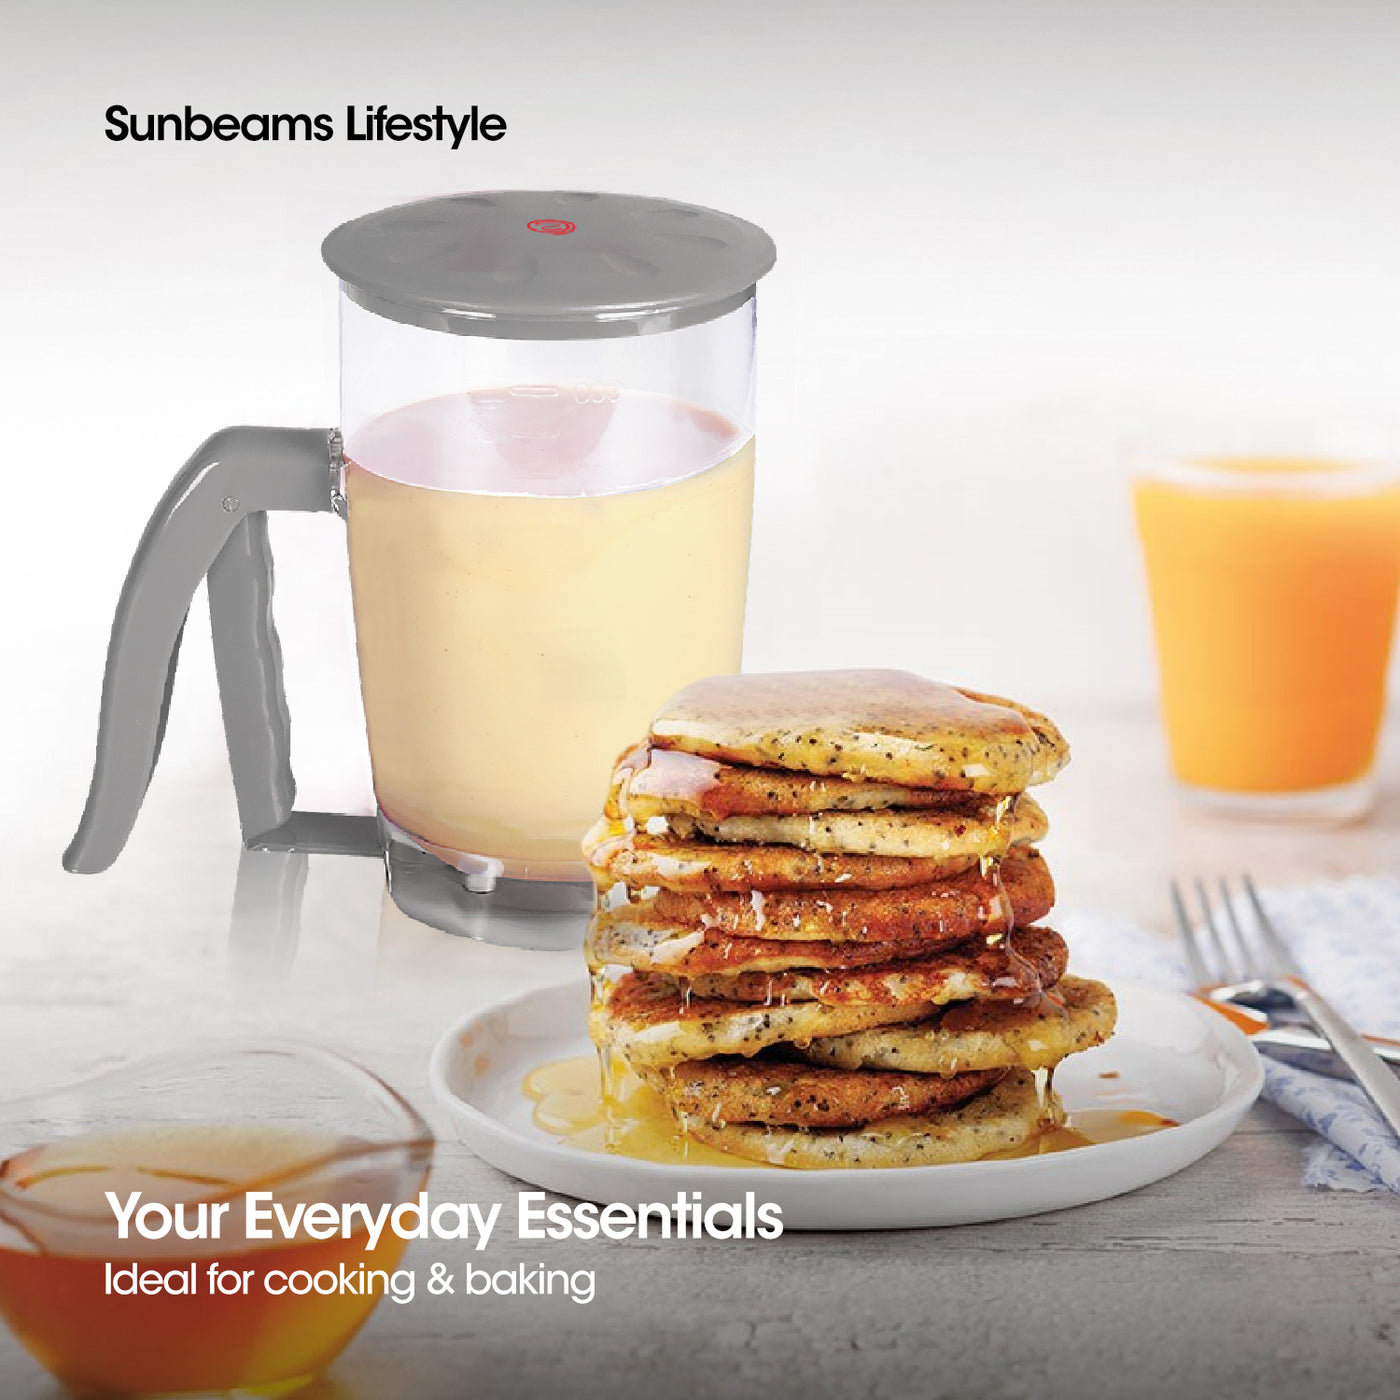 SLIQUE Premium Precision Pancake & Cupcake Batter Dispenser  Baking Accessories  Amazing Gift Idea For Any Occasion!